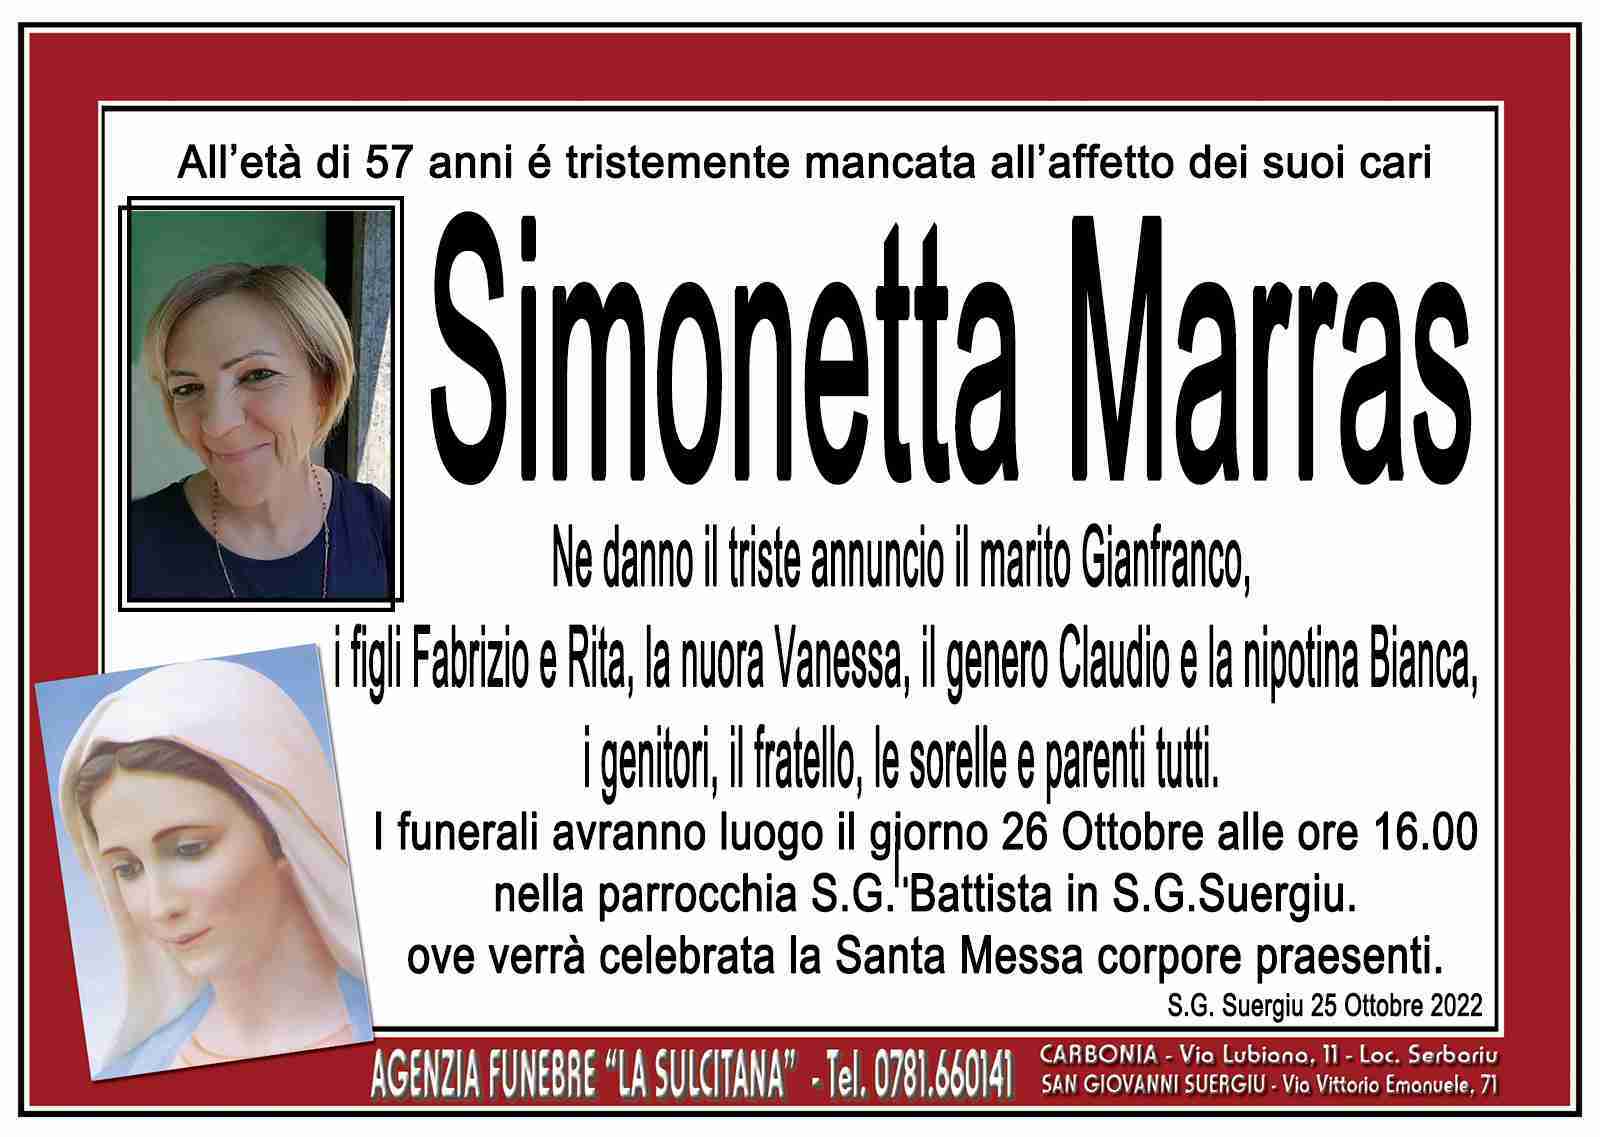 Simonetta Marras